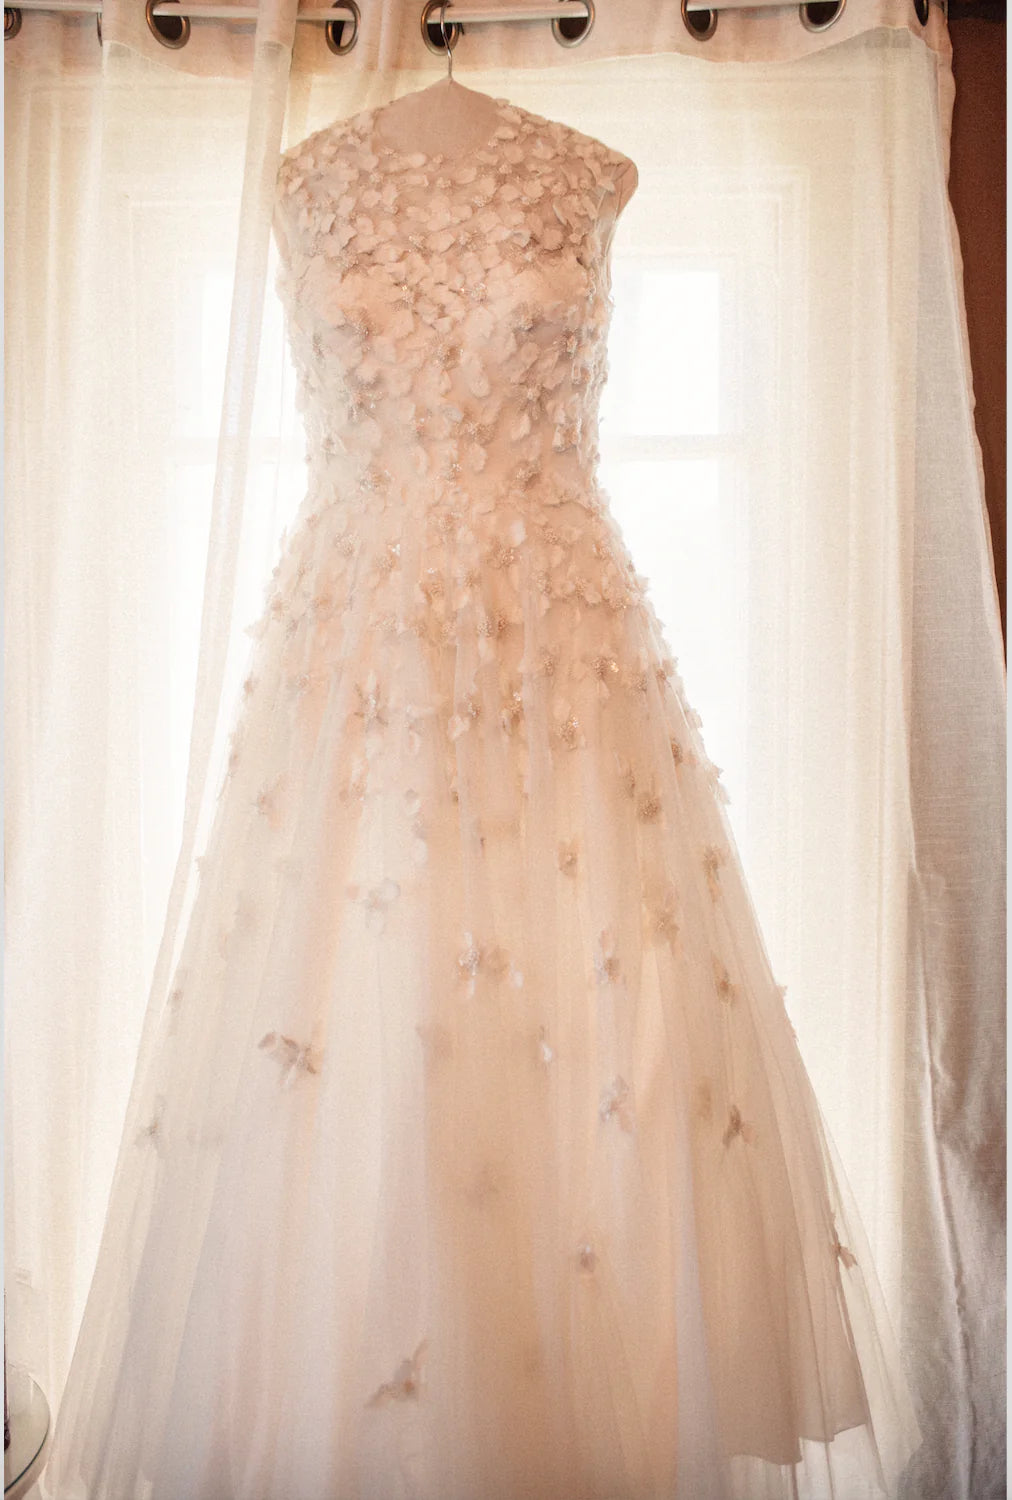 Christian Siriano Wedding Illusion Ball Gown, Size 12/14